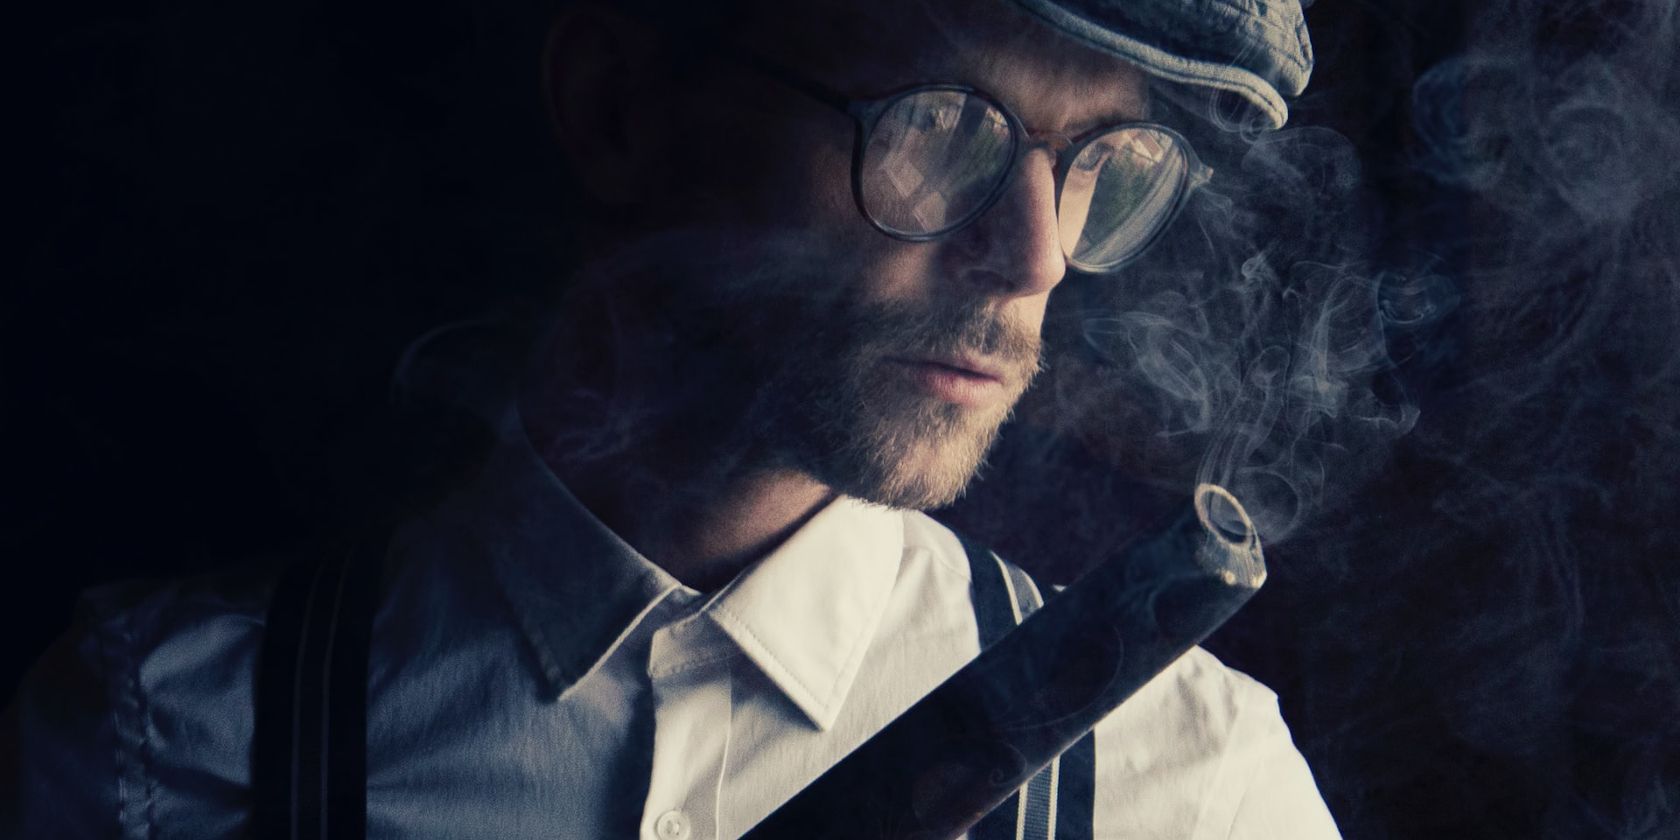 Man With a Smoking Antique Gun